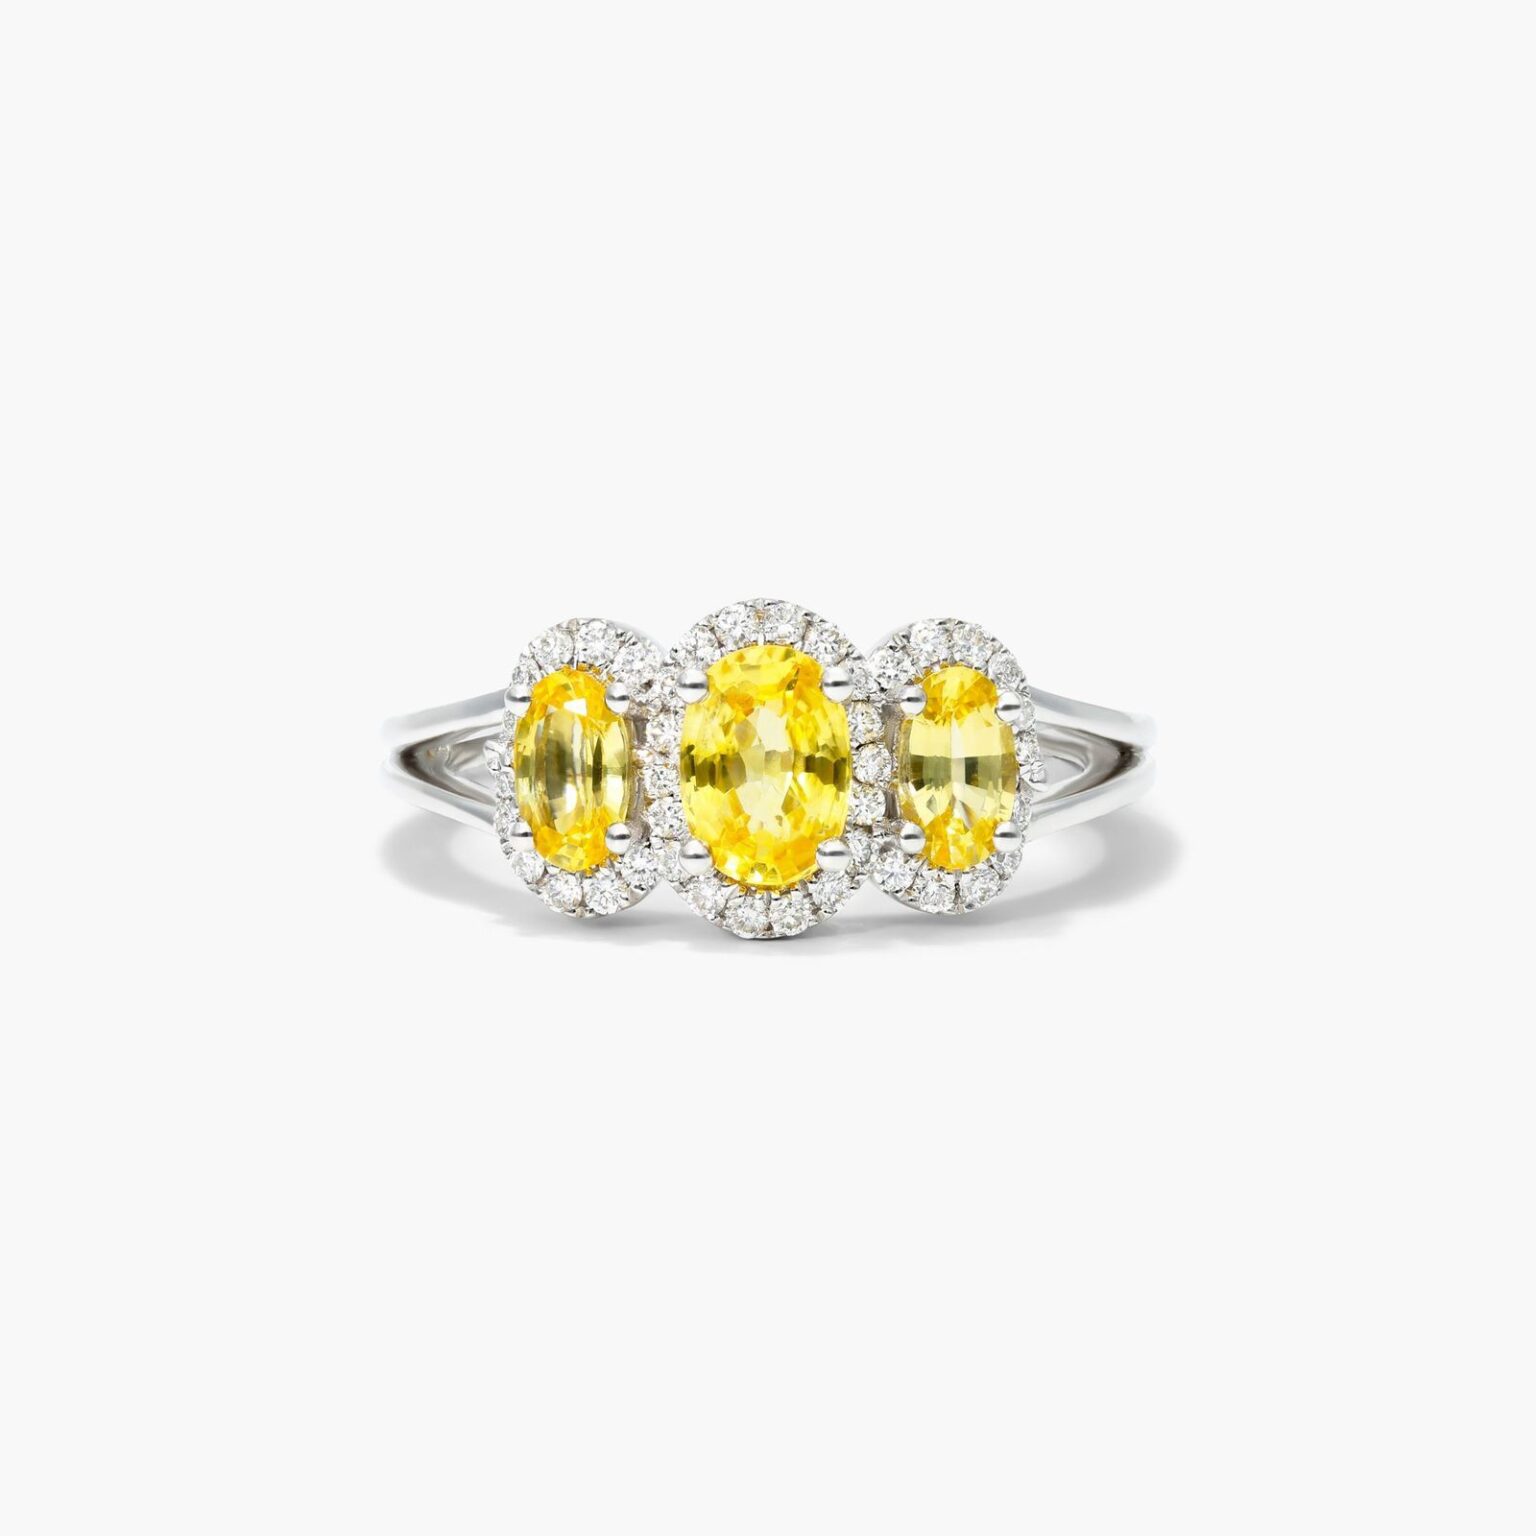 Yellow Sapphire And Diamond Ring 1536x1536 